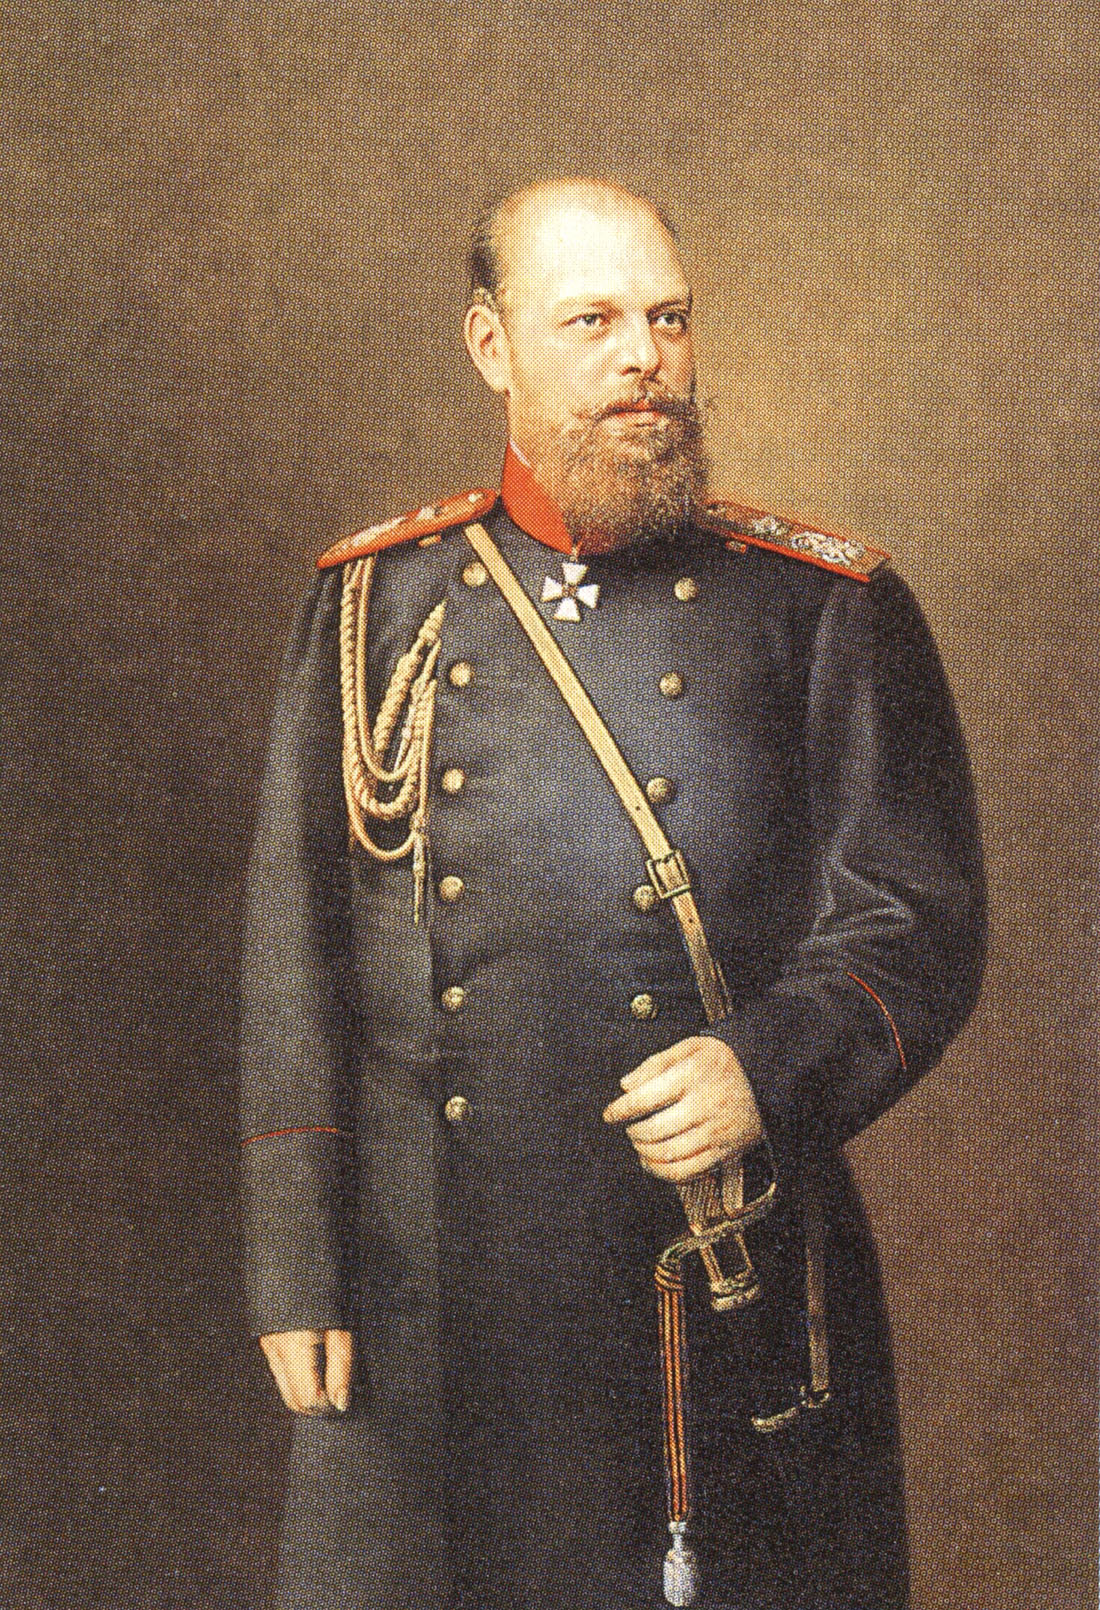 П. П. Заболоцкий. "Император Александр III". 1889.